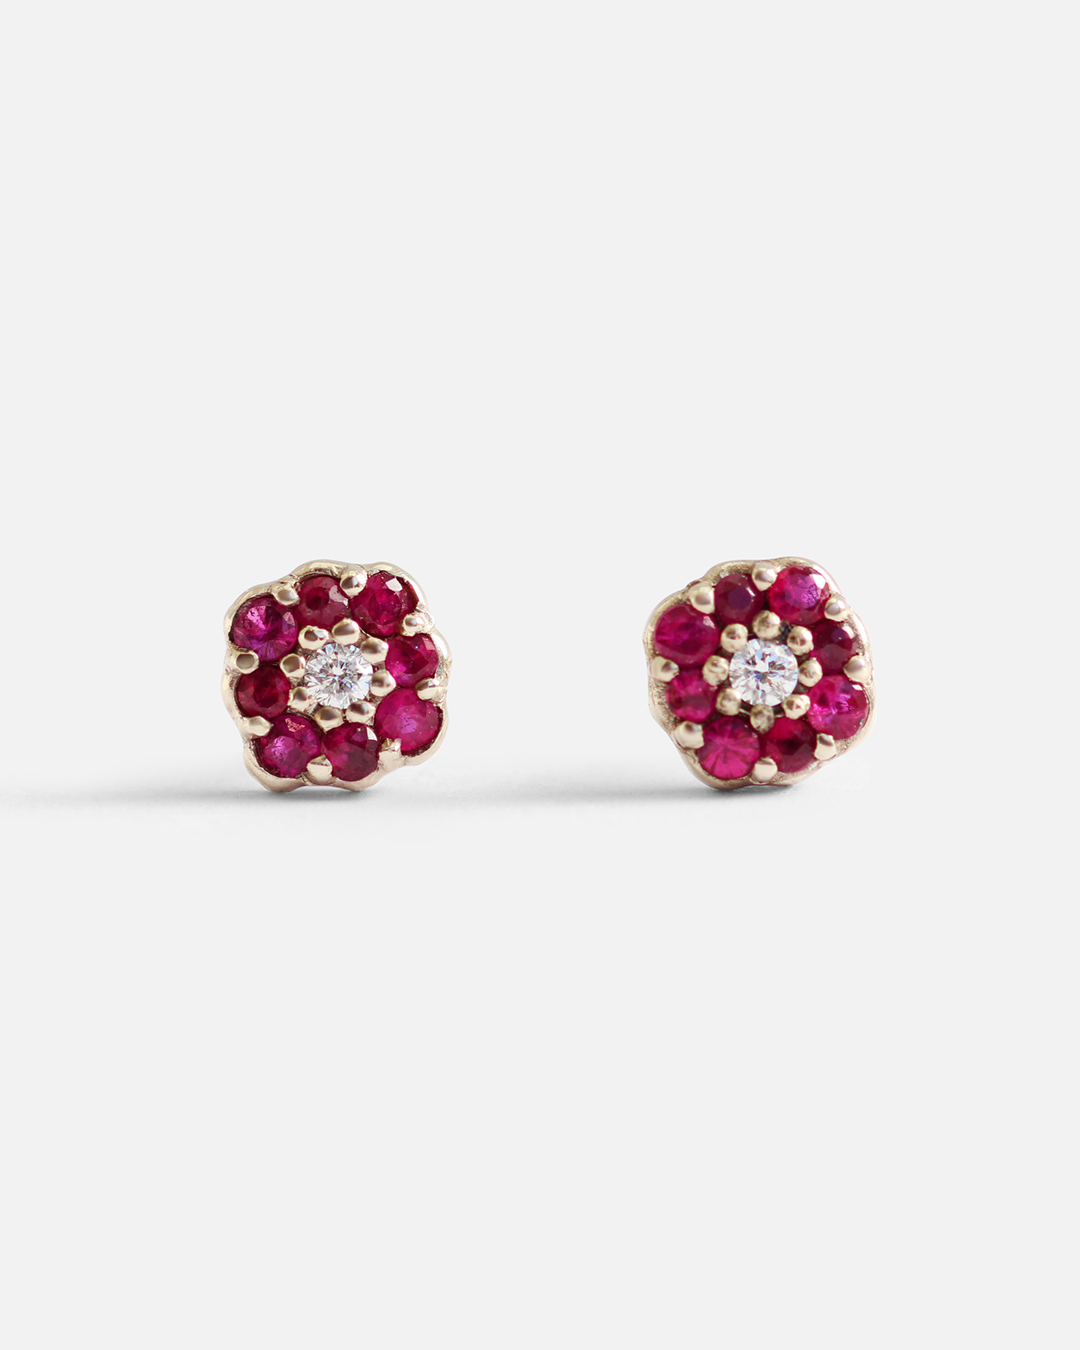 Flower Cluster / Ruby Studs By fitzgerald jewelry in earrings Category